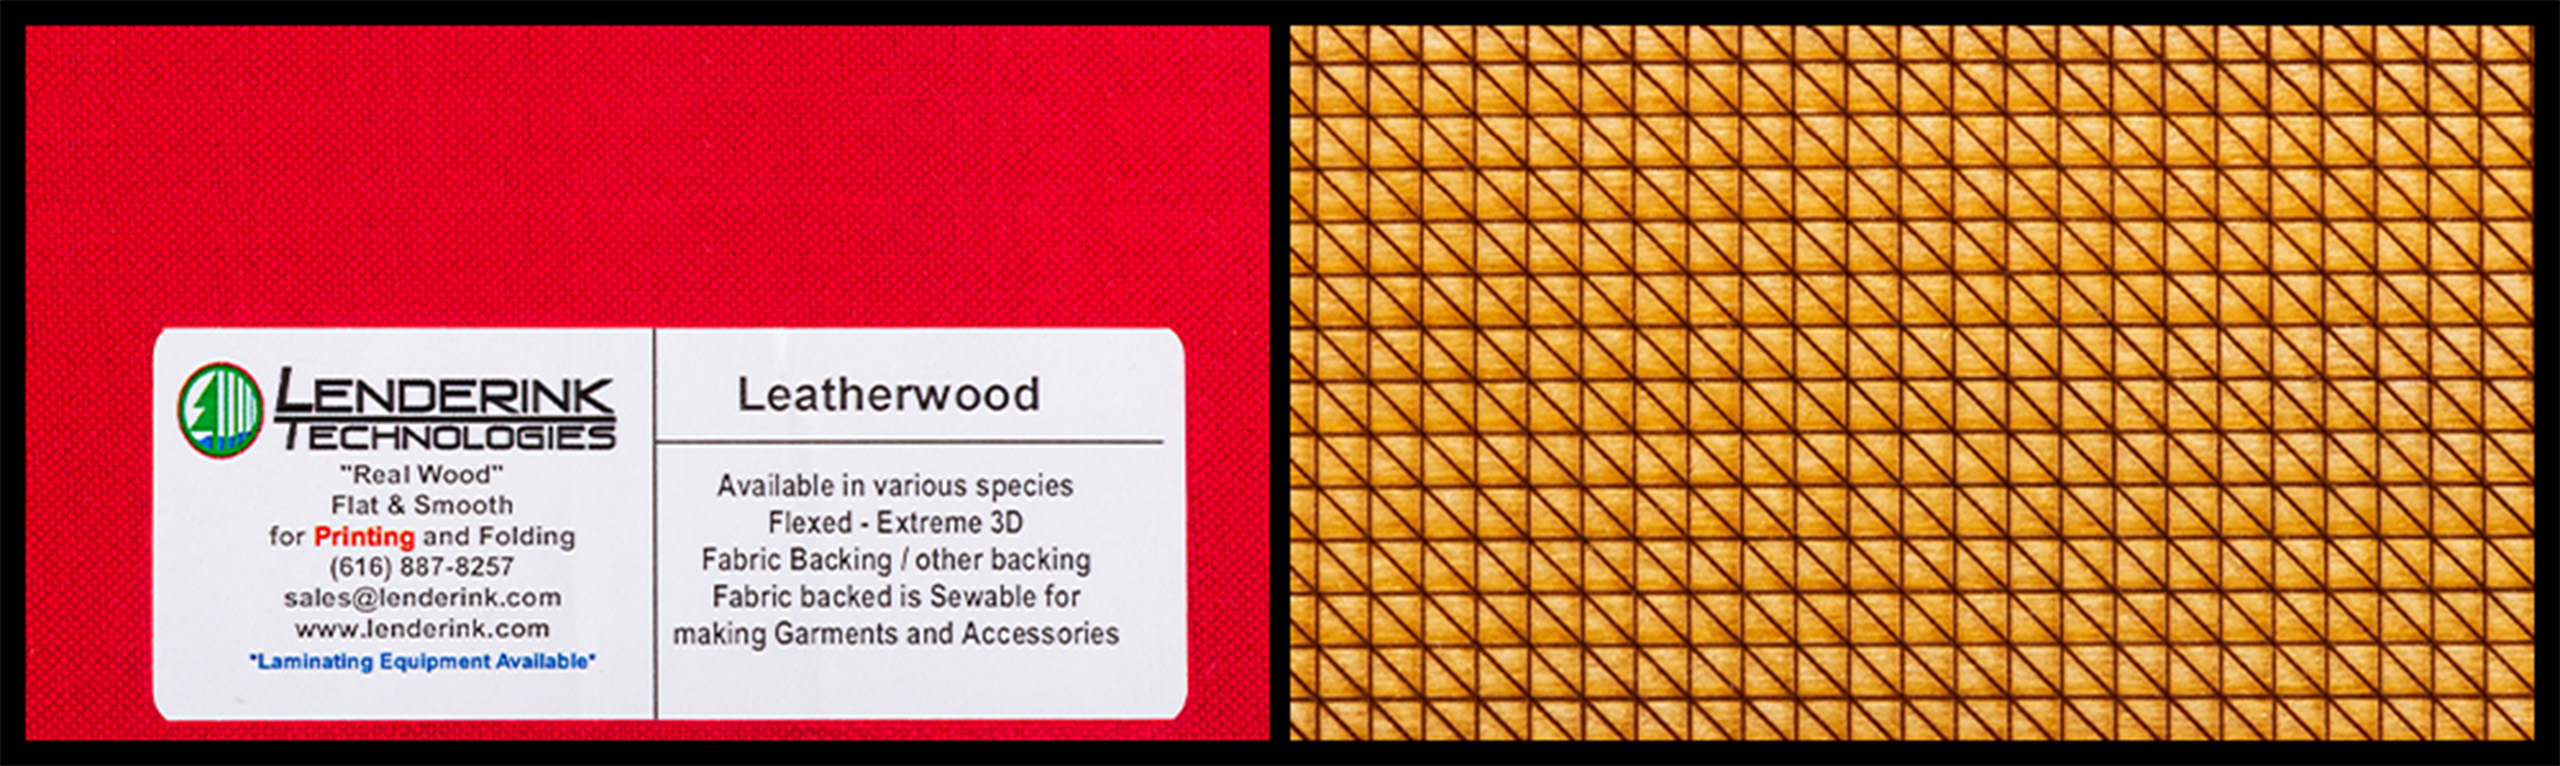 Leatherwood Micro Cut Wood